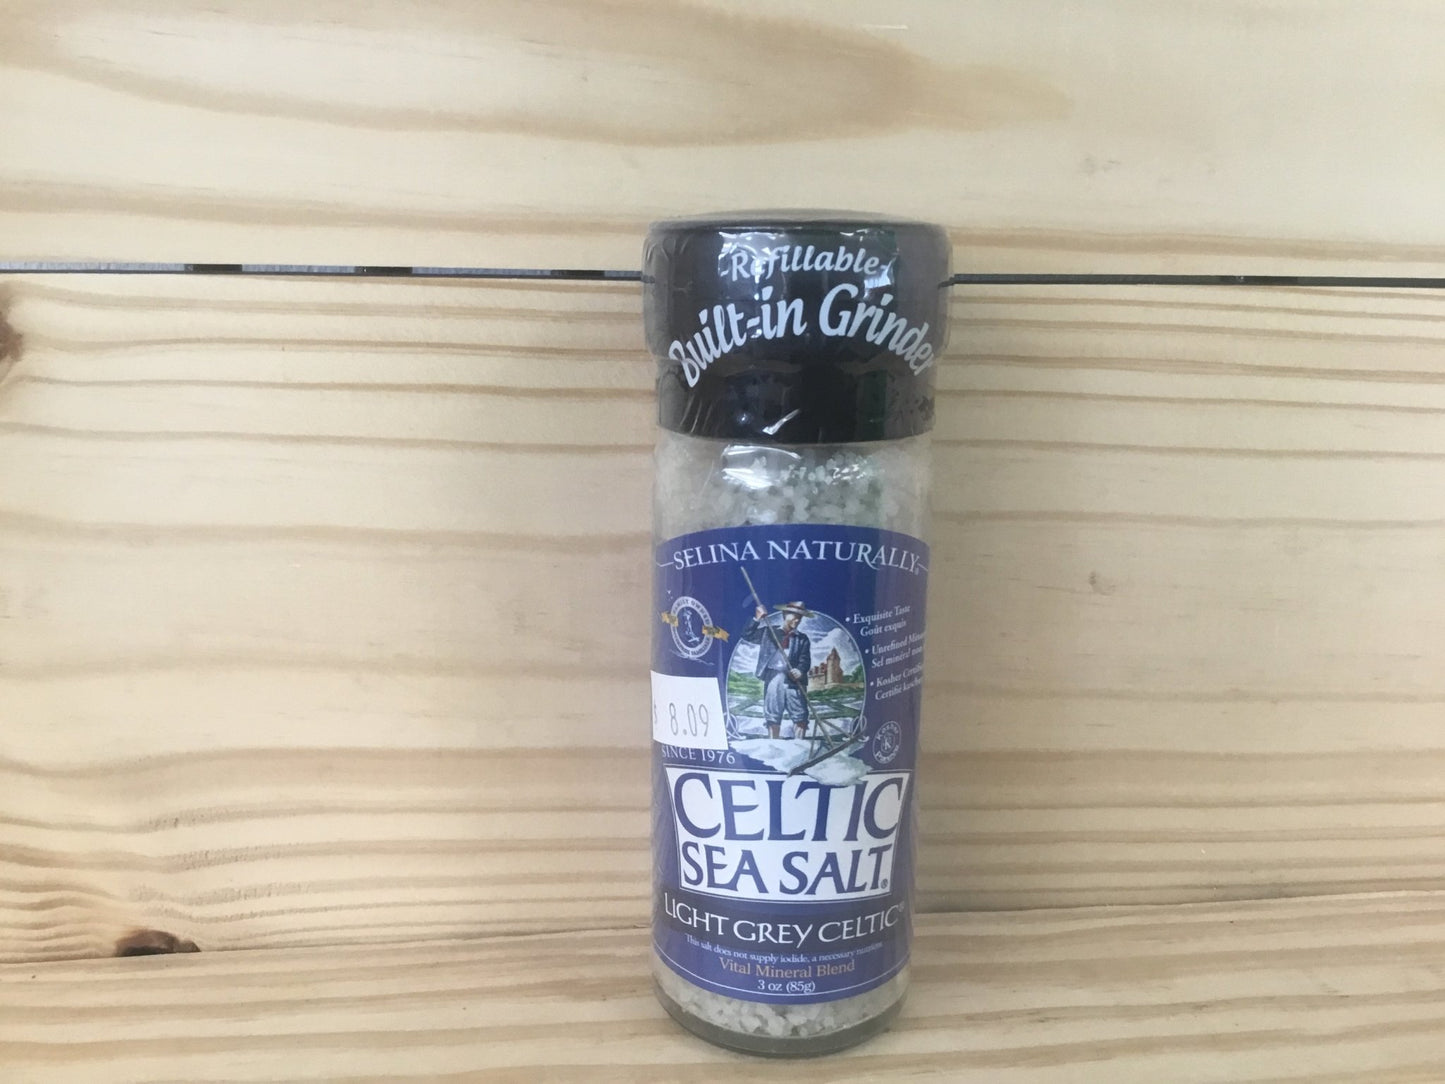 Light Grey Celtic Sea Salt 3oz - One Life Natural Market NC